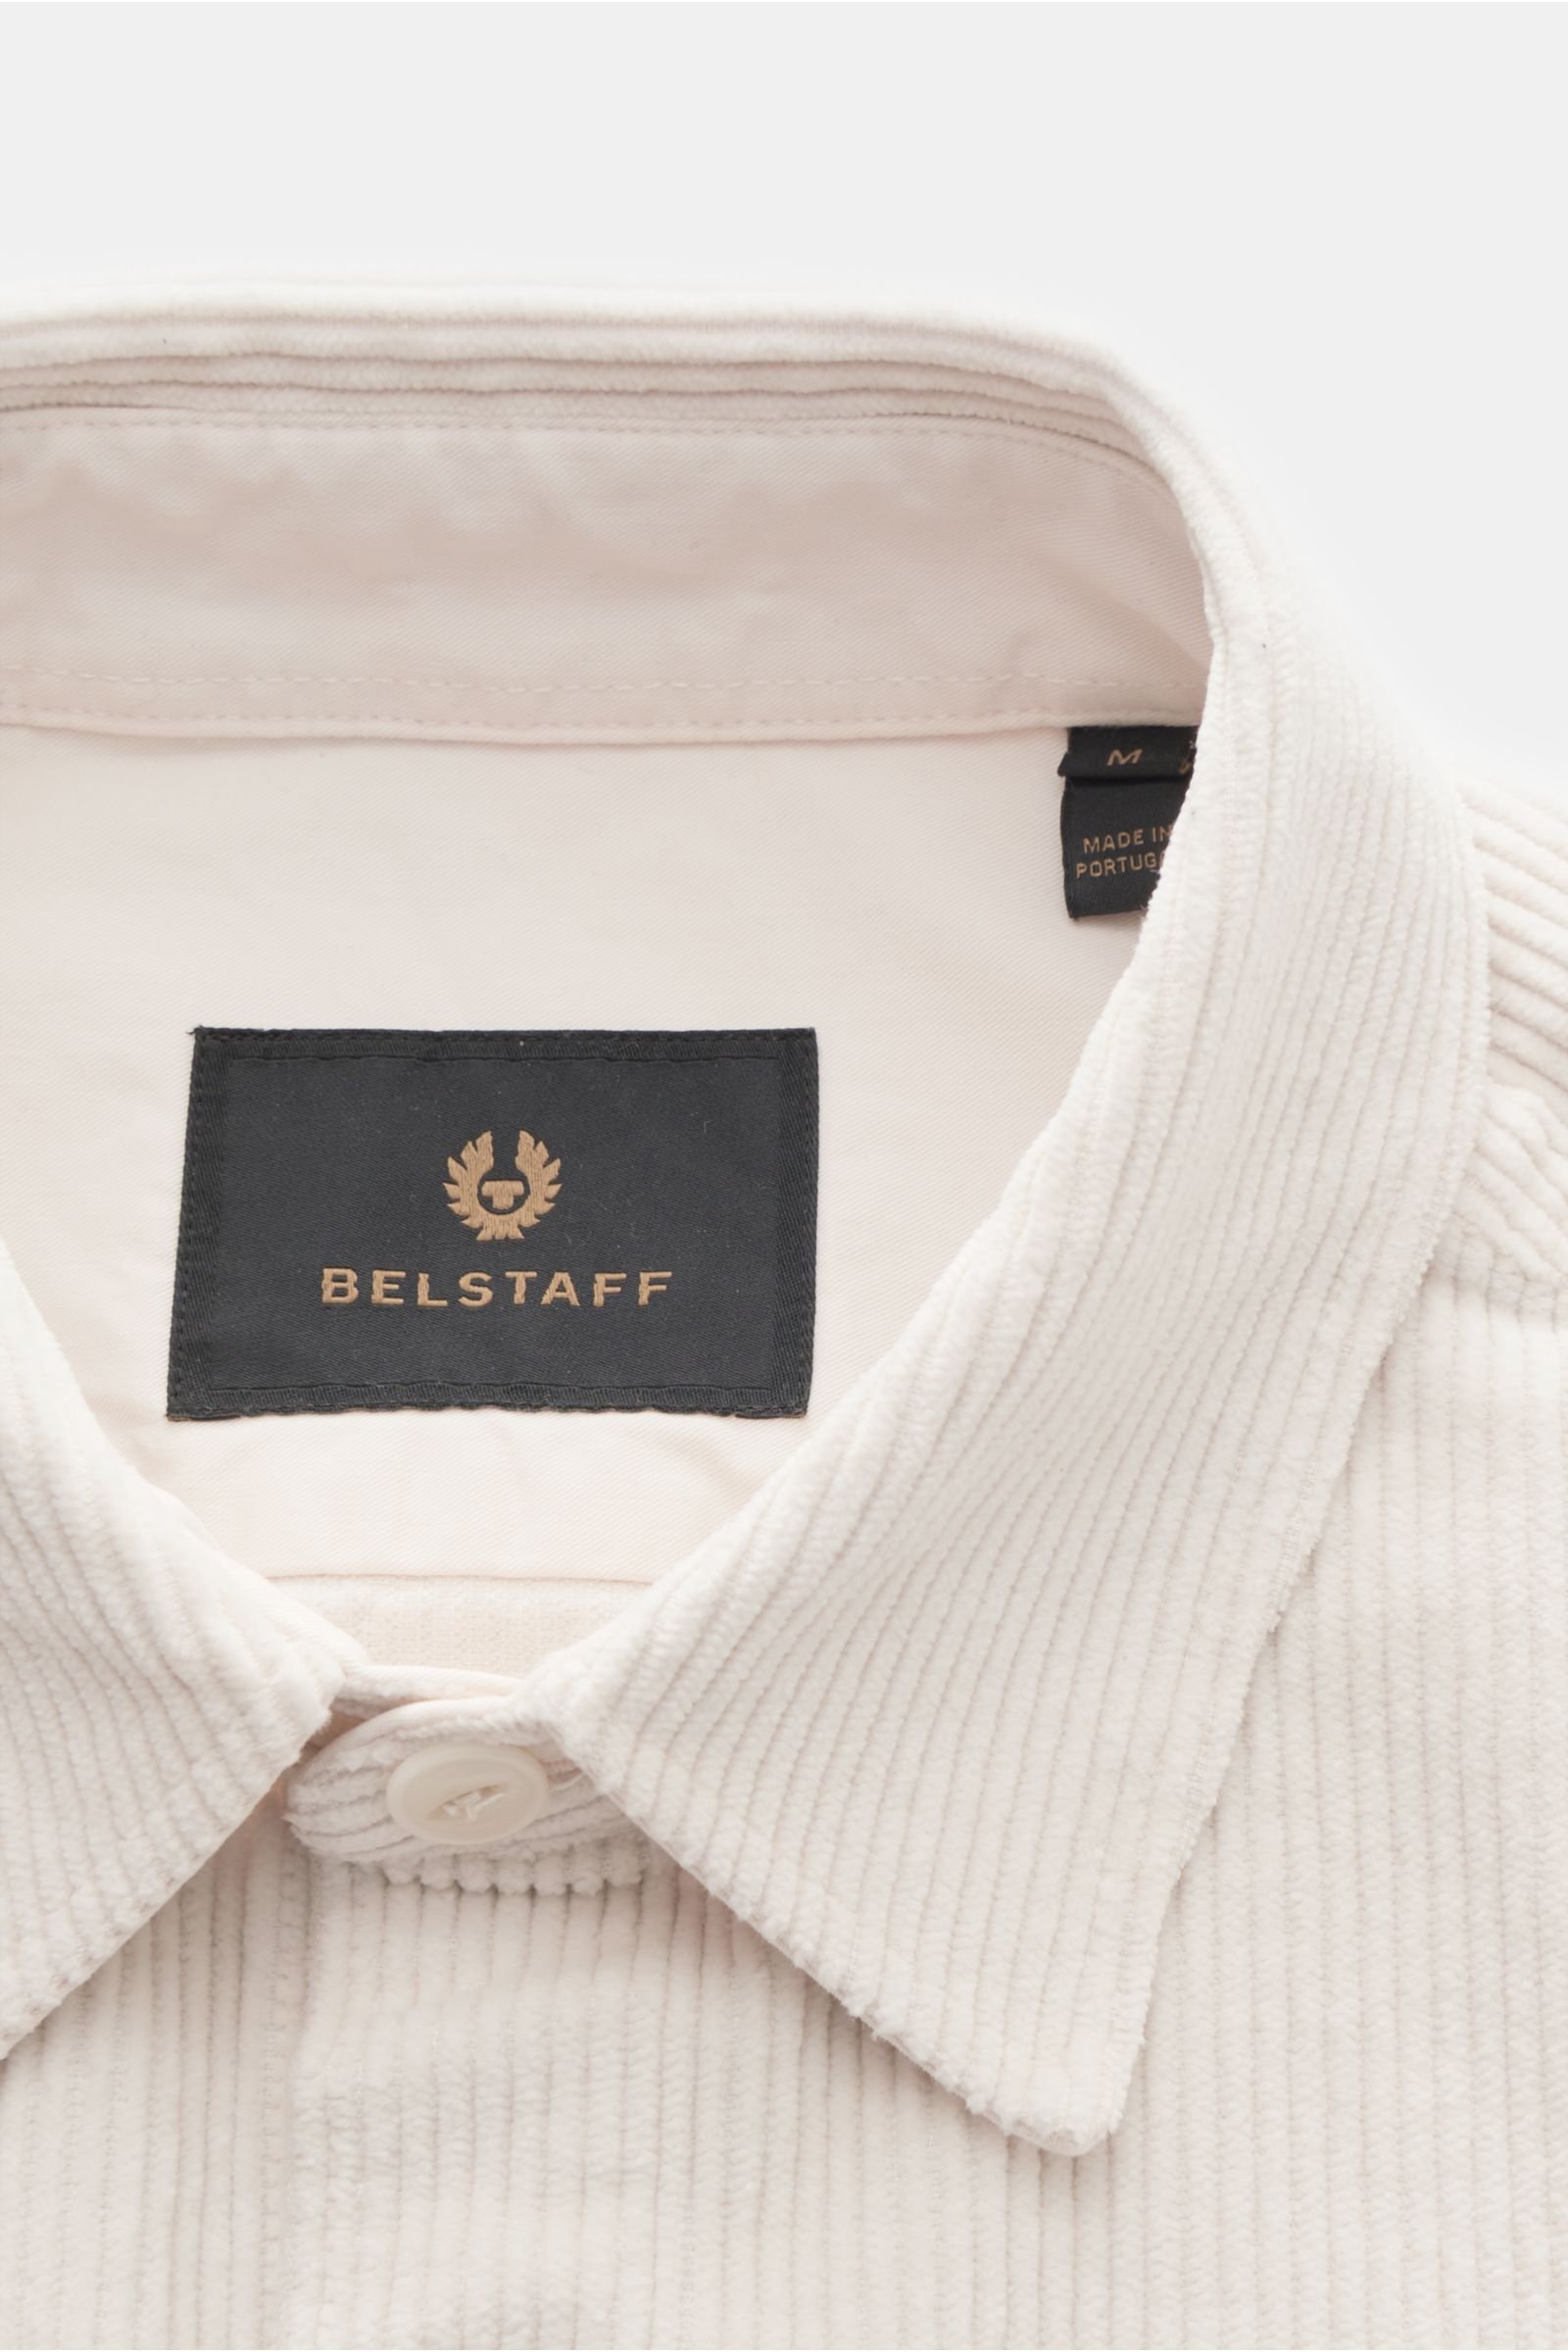 BELSTAFF corduroy shirt 'Fallgate' Kent collar off-white | BRAUN Hamburg